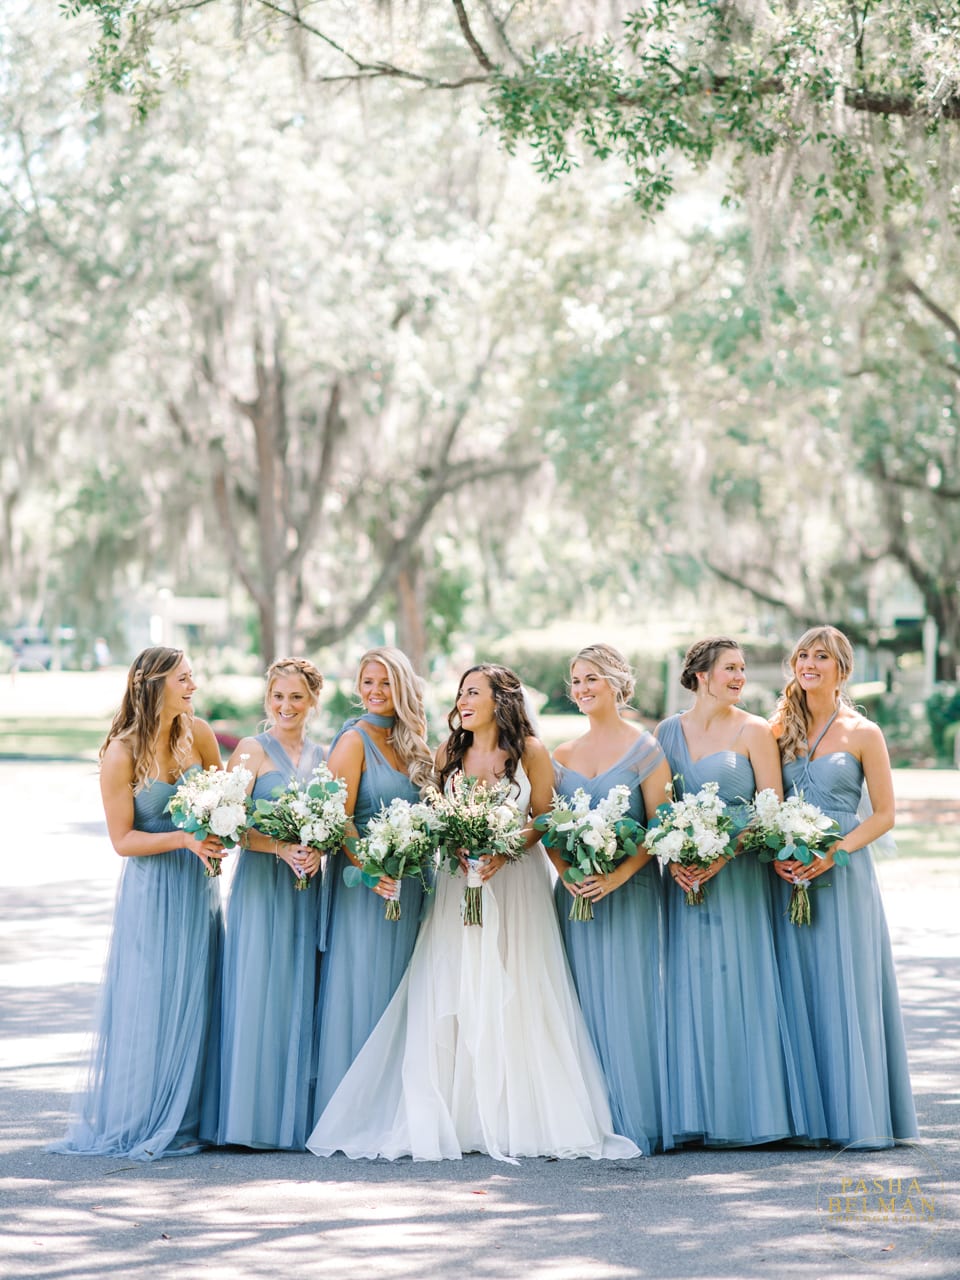 Bride and bridesmaids pose ideas at Wachesaw Plantation by Pasha Belman Photography. Gorgeous blue bridesmaids dresses.